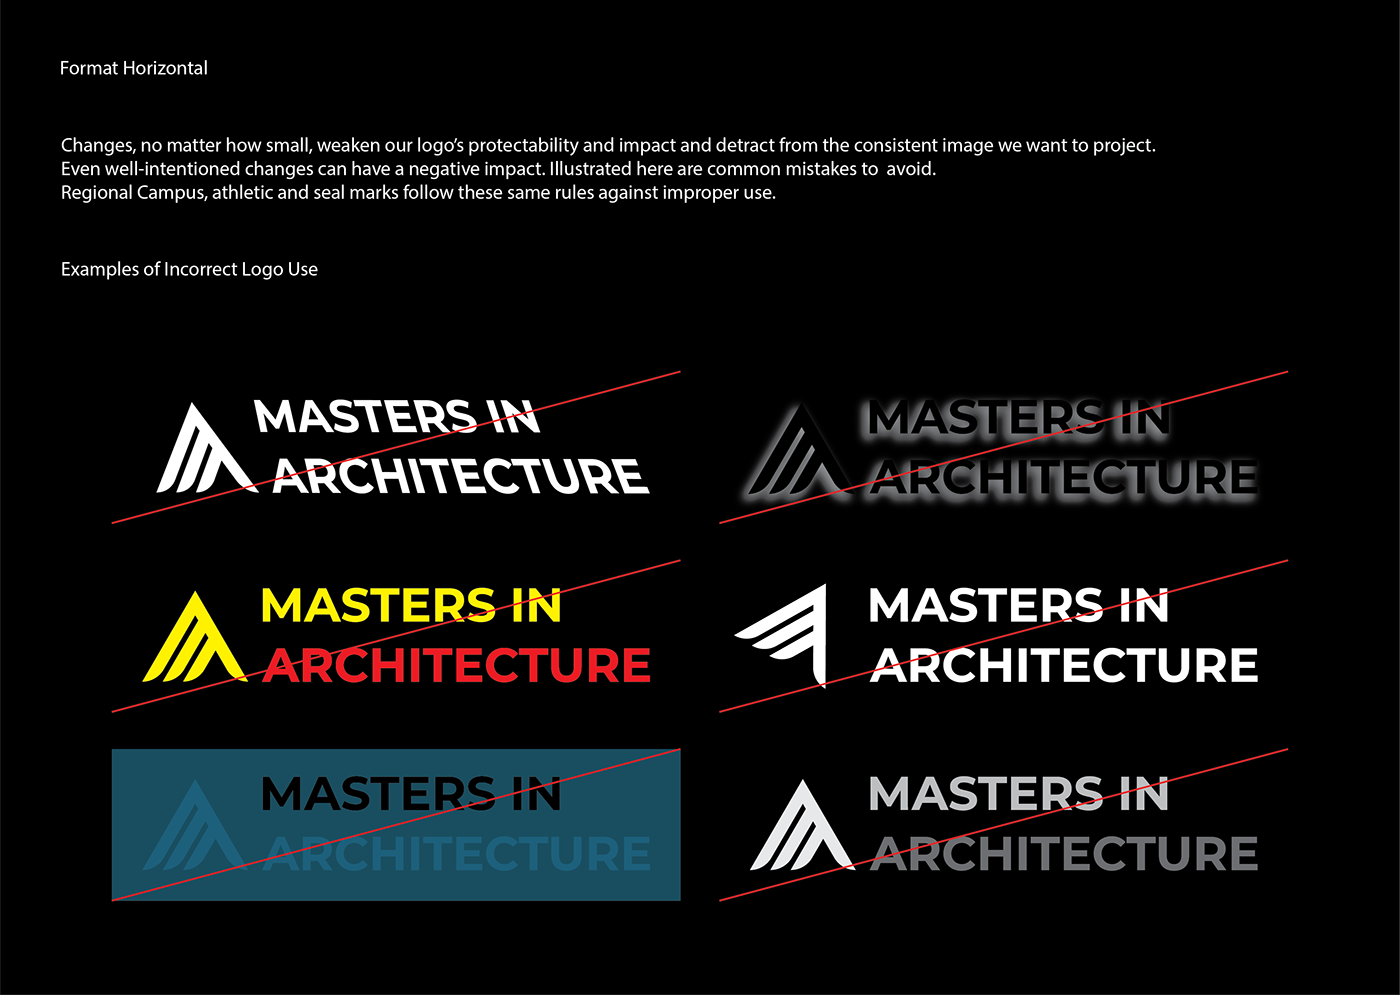 architectural architecture masters Masters in Architecture